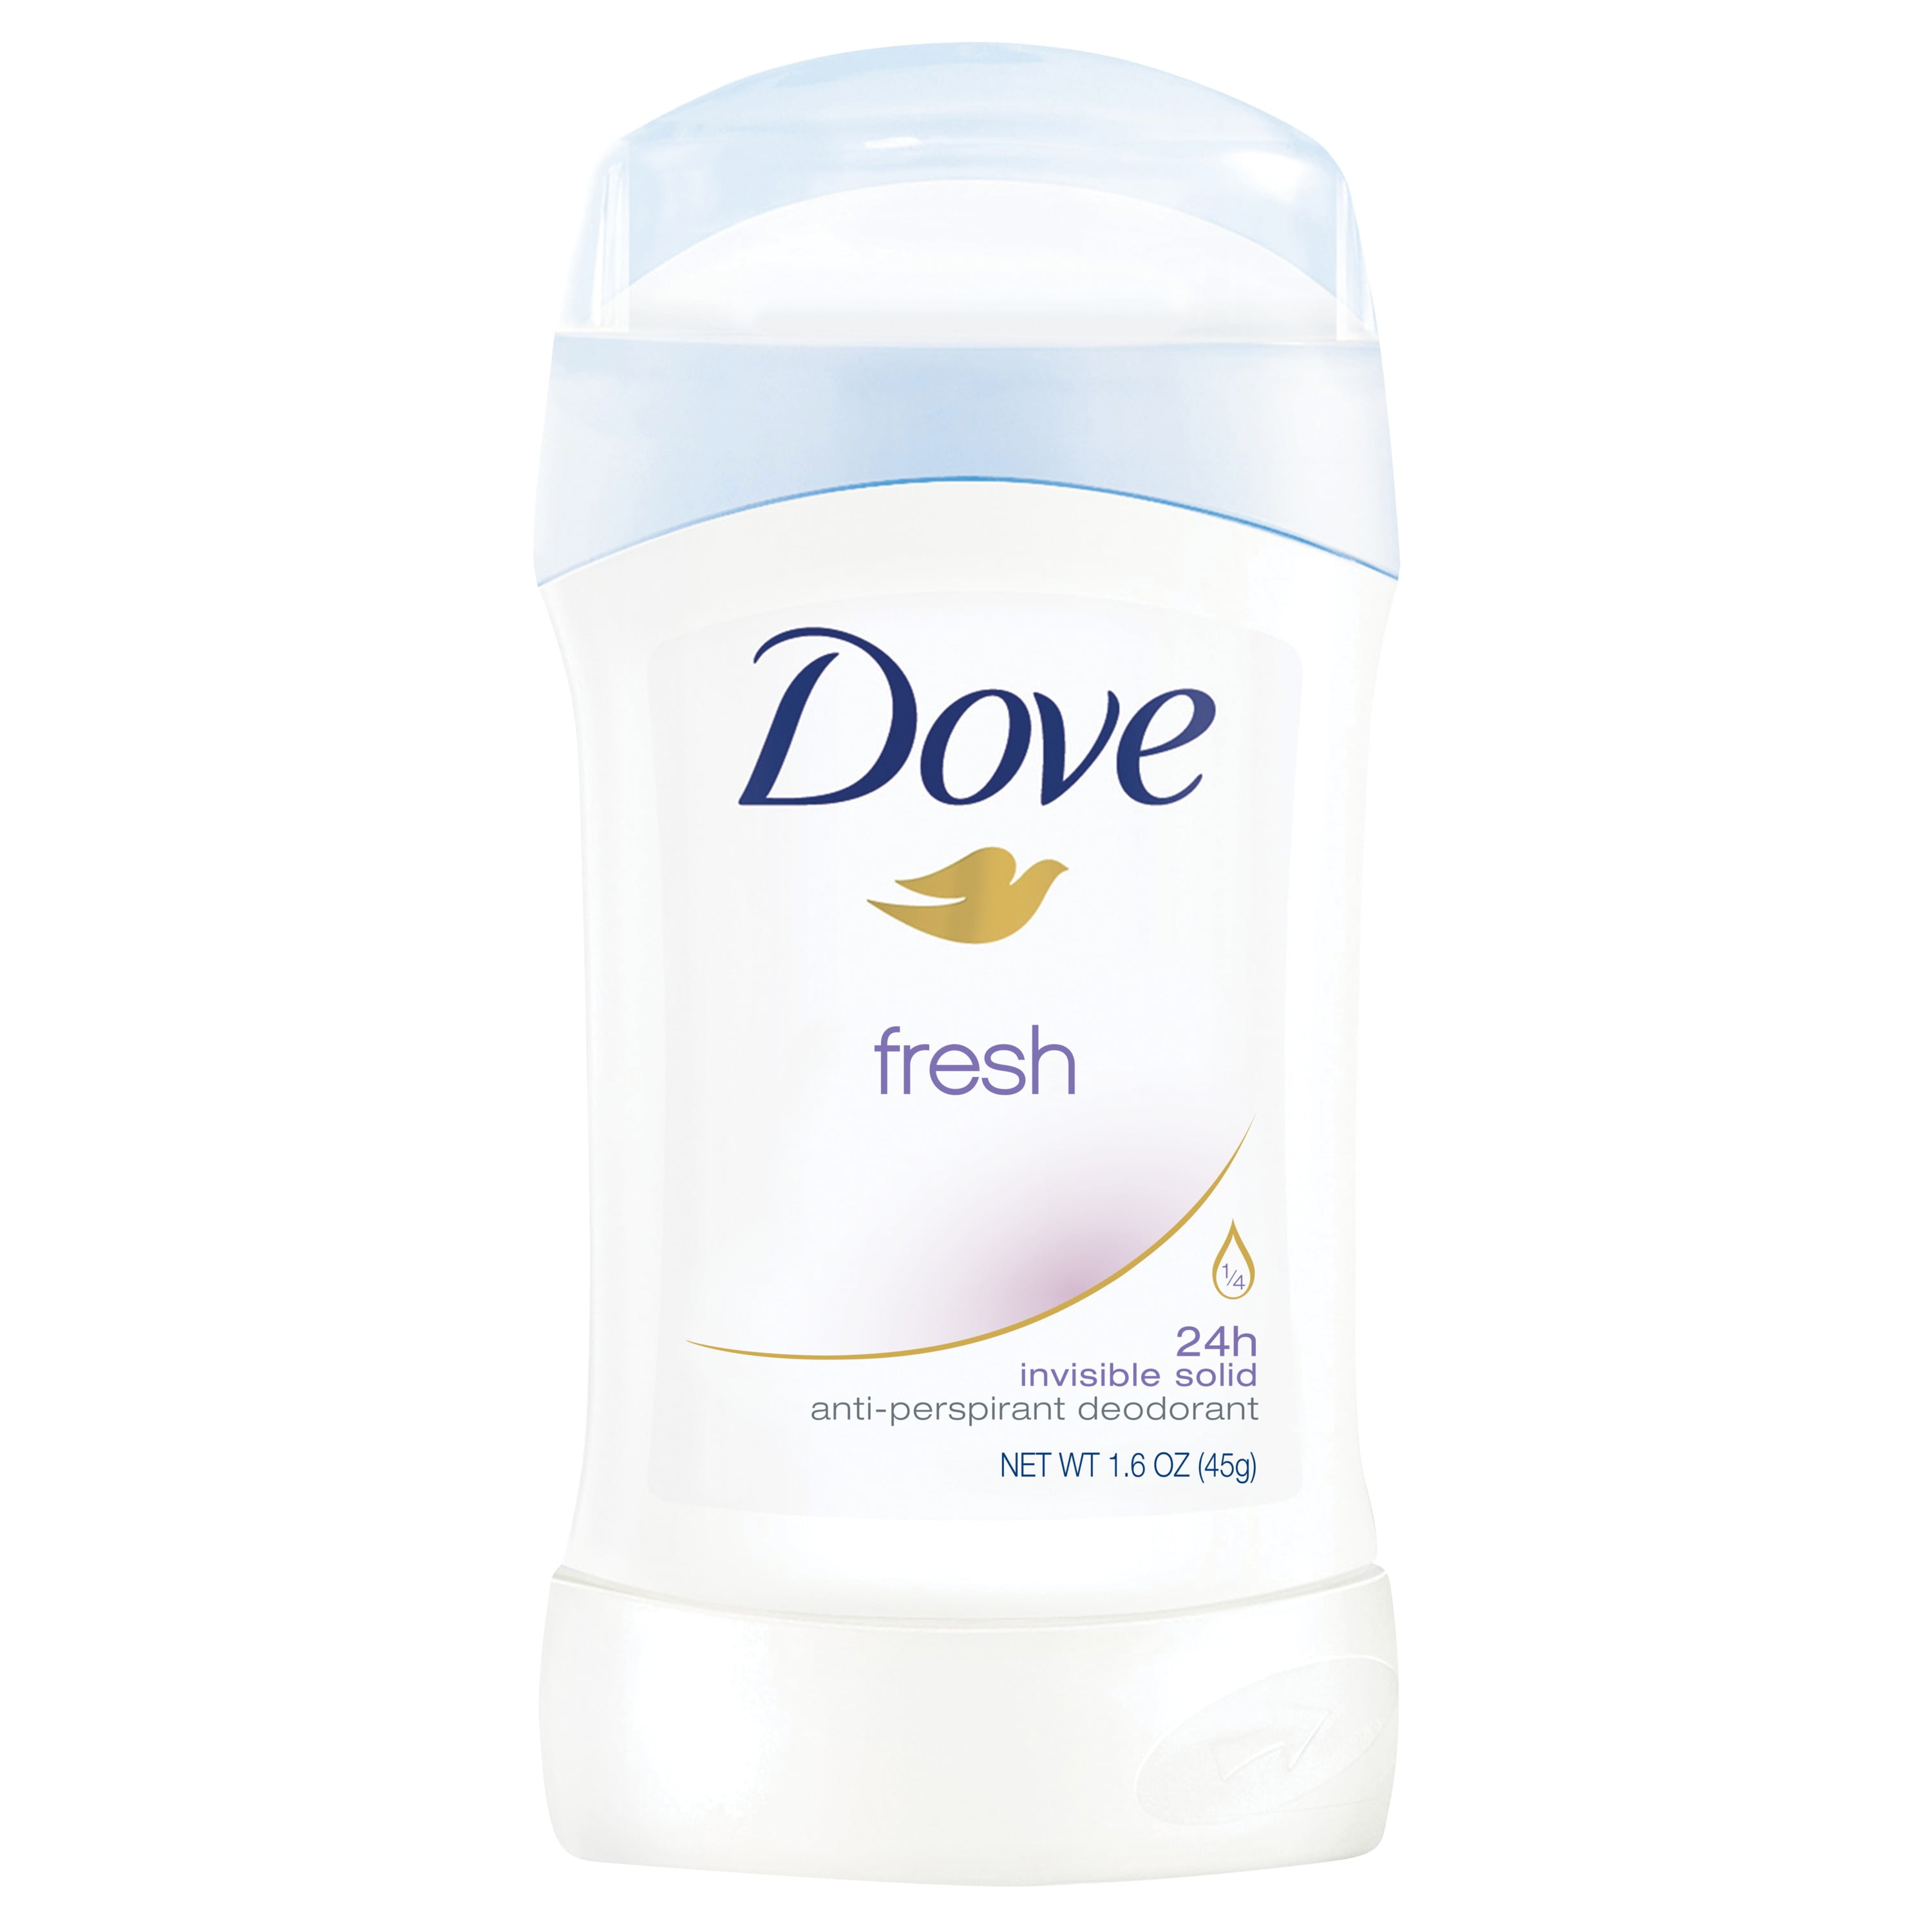 Стики dove. Дезодорант-антиперспирант Fresh Invisible Solid dove. Dove стик женский Fresh. Antiperspirant Deodorant Invisible Solid. Dove невидимый дезодорант.